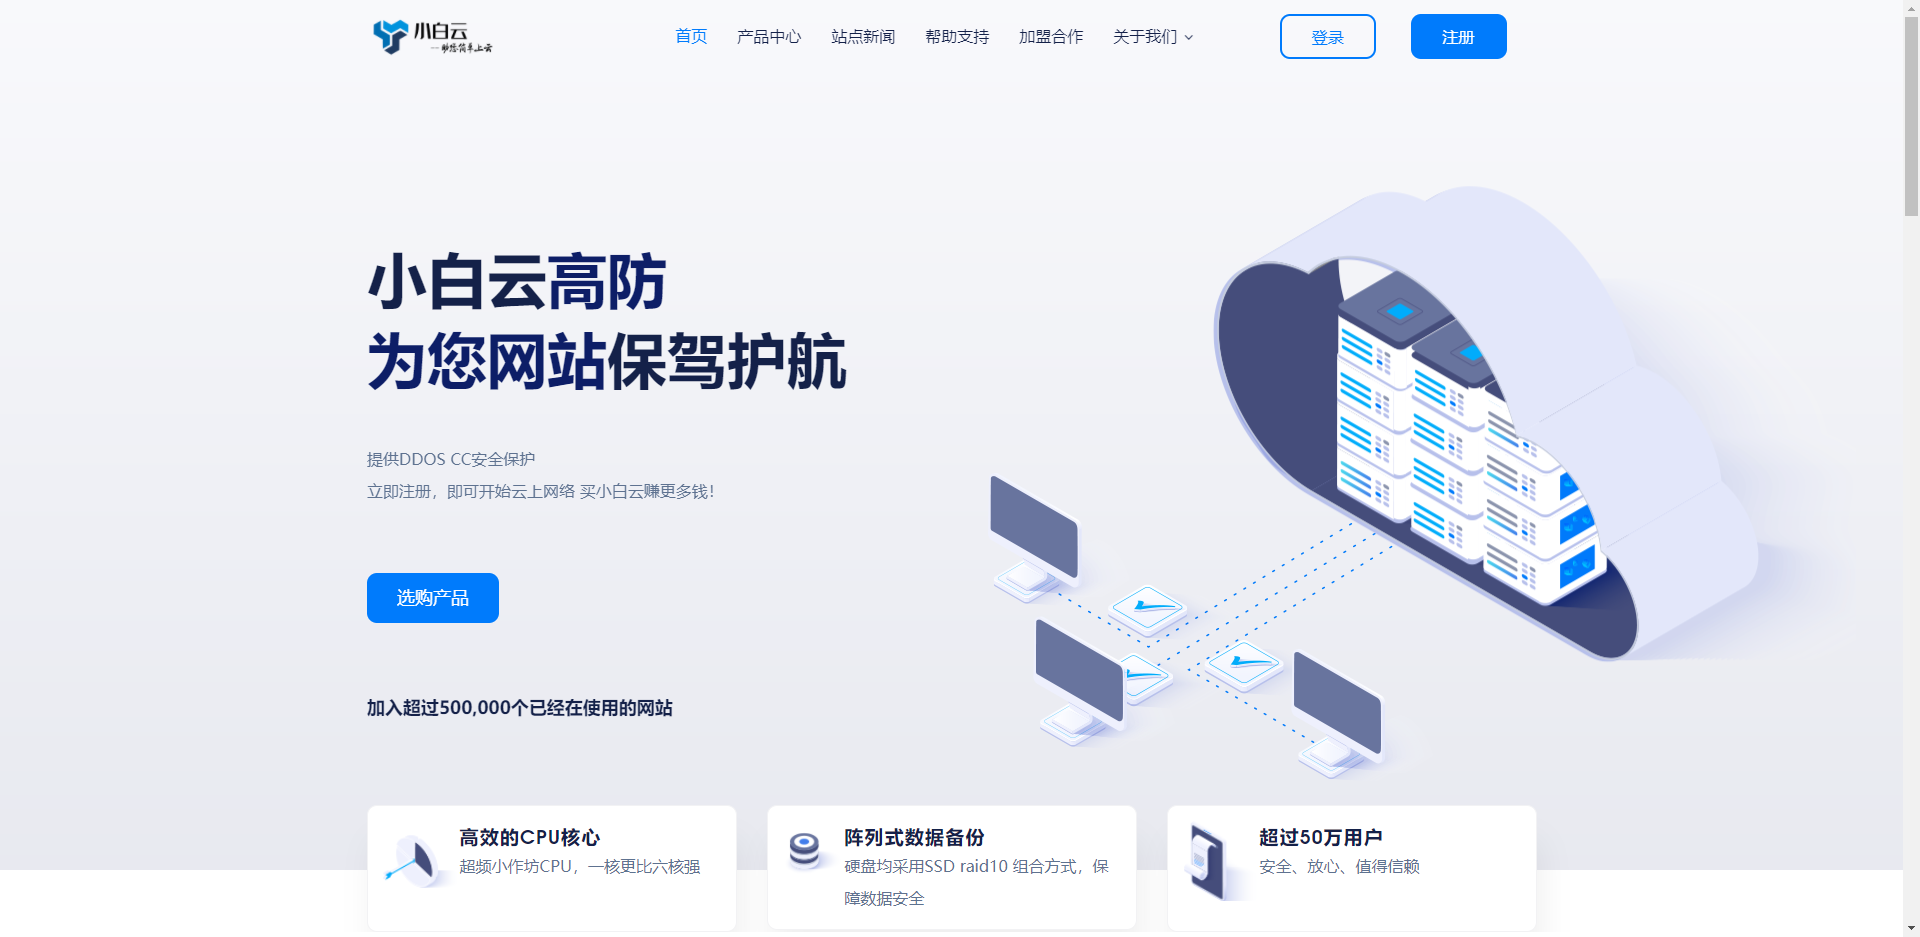  Small Baiyun Enterprise Cloud Sichuan Chengdu Tianfu Backbone Unicom Line 16h, 16g, 120g, 20m, 100g hard disk defense, 299 yuan in the first month, 199 yuan in the second month